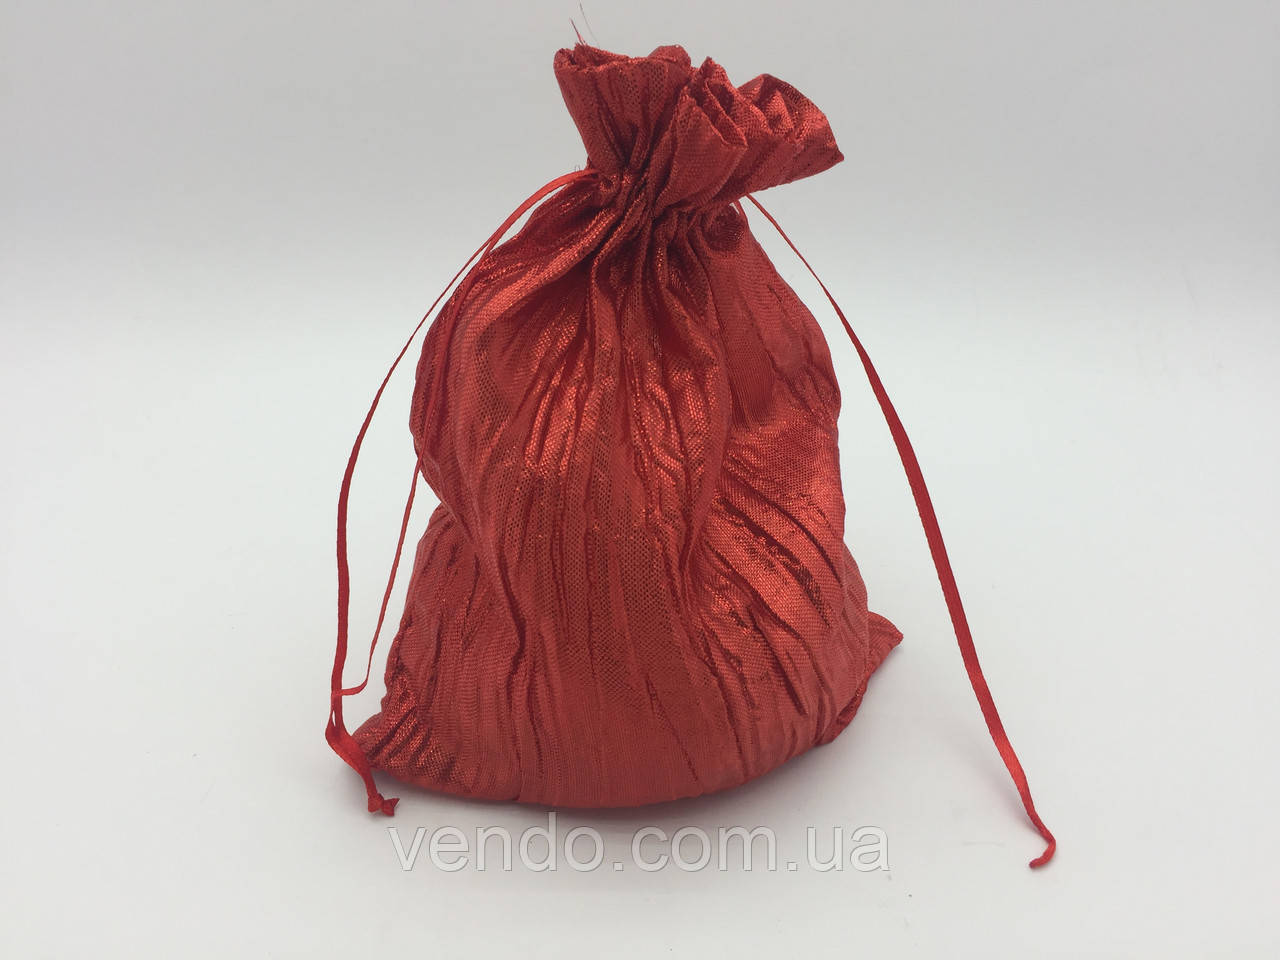 Чехол для карт таро, мешочек из жатой парчи Красный,14х20 см